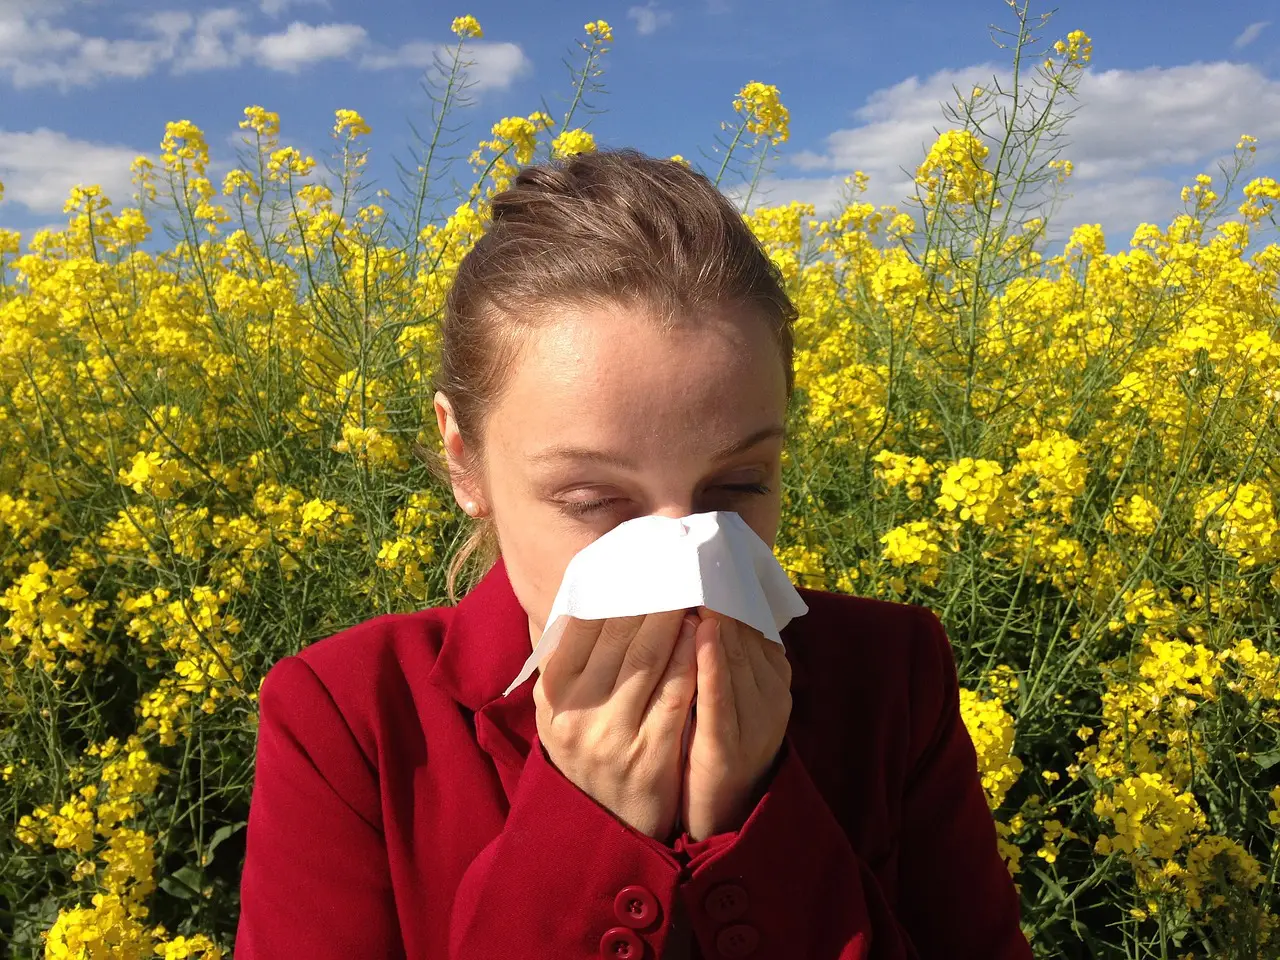 Uen femme en plein crise d'allergie au pollen